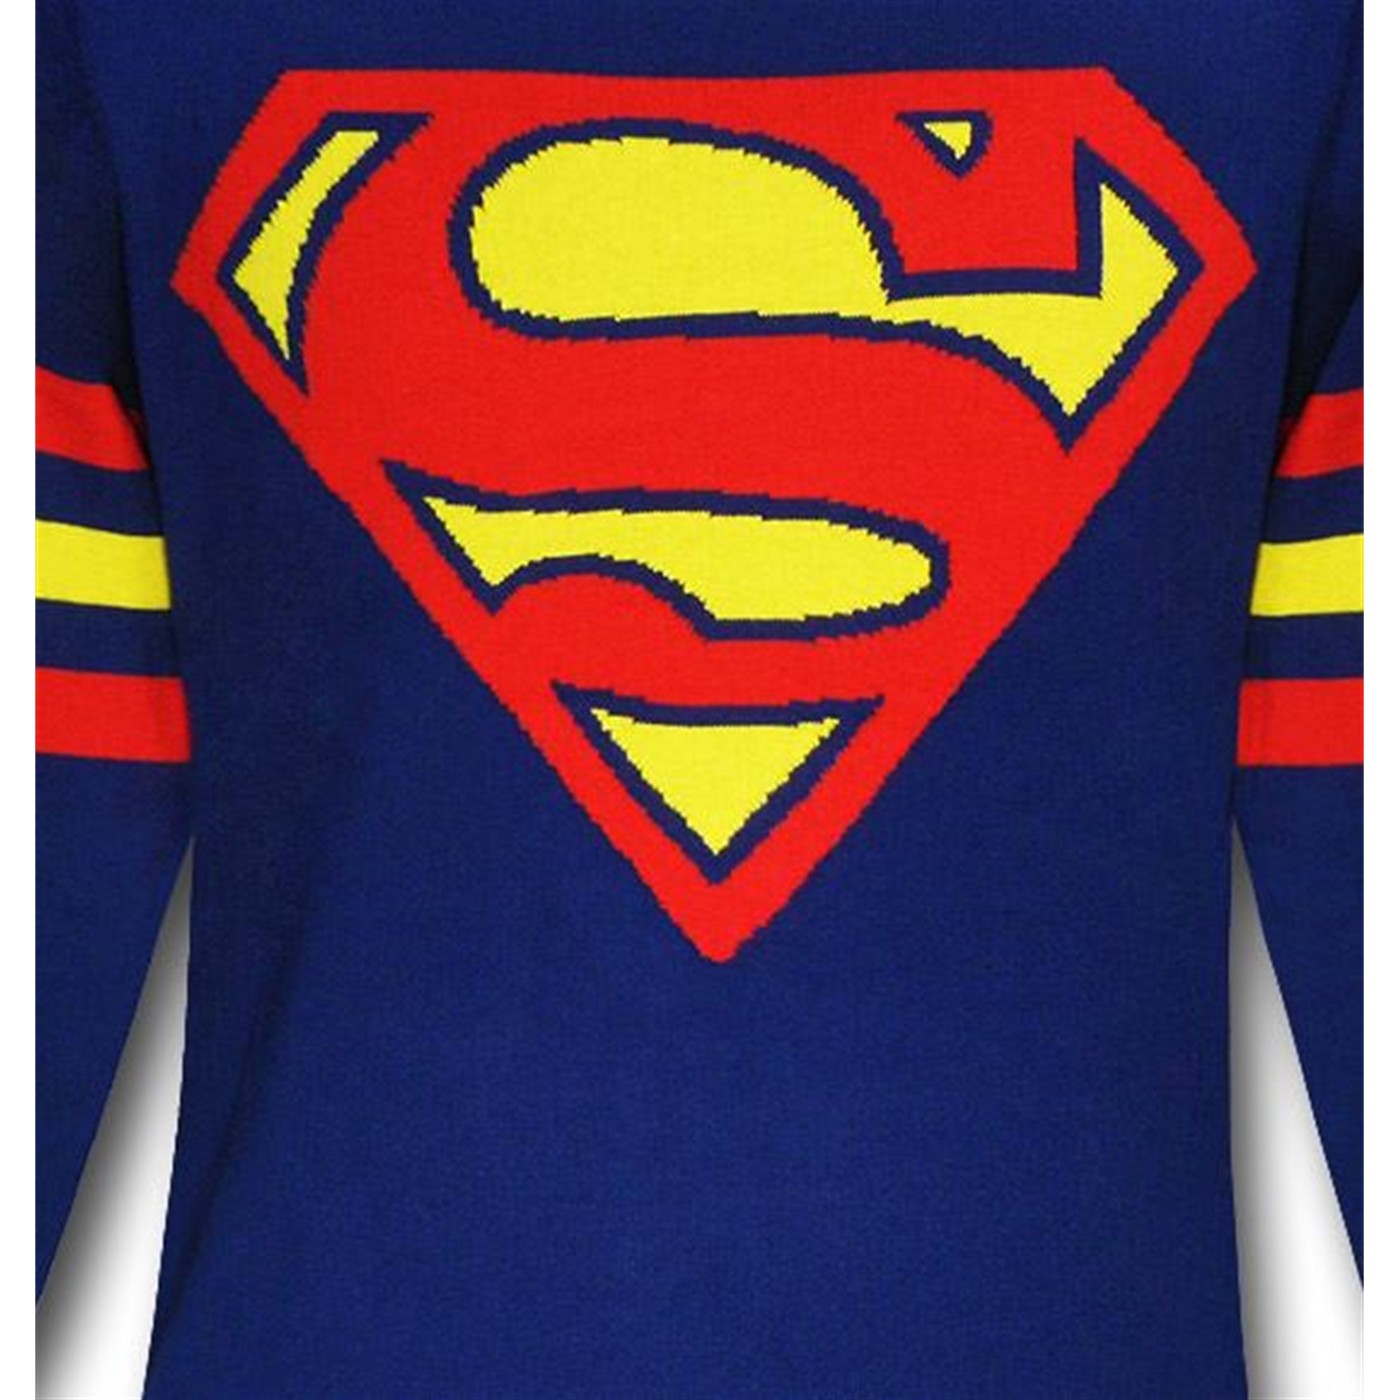 Superman Symbol Blue Sweater w/Striped Arms-Men's Medium - image 2 of 2